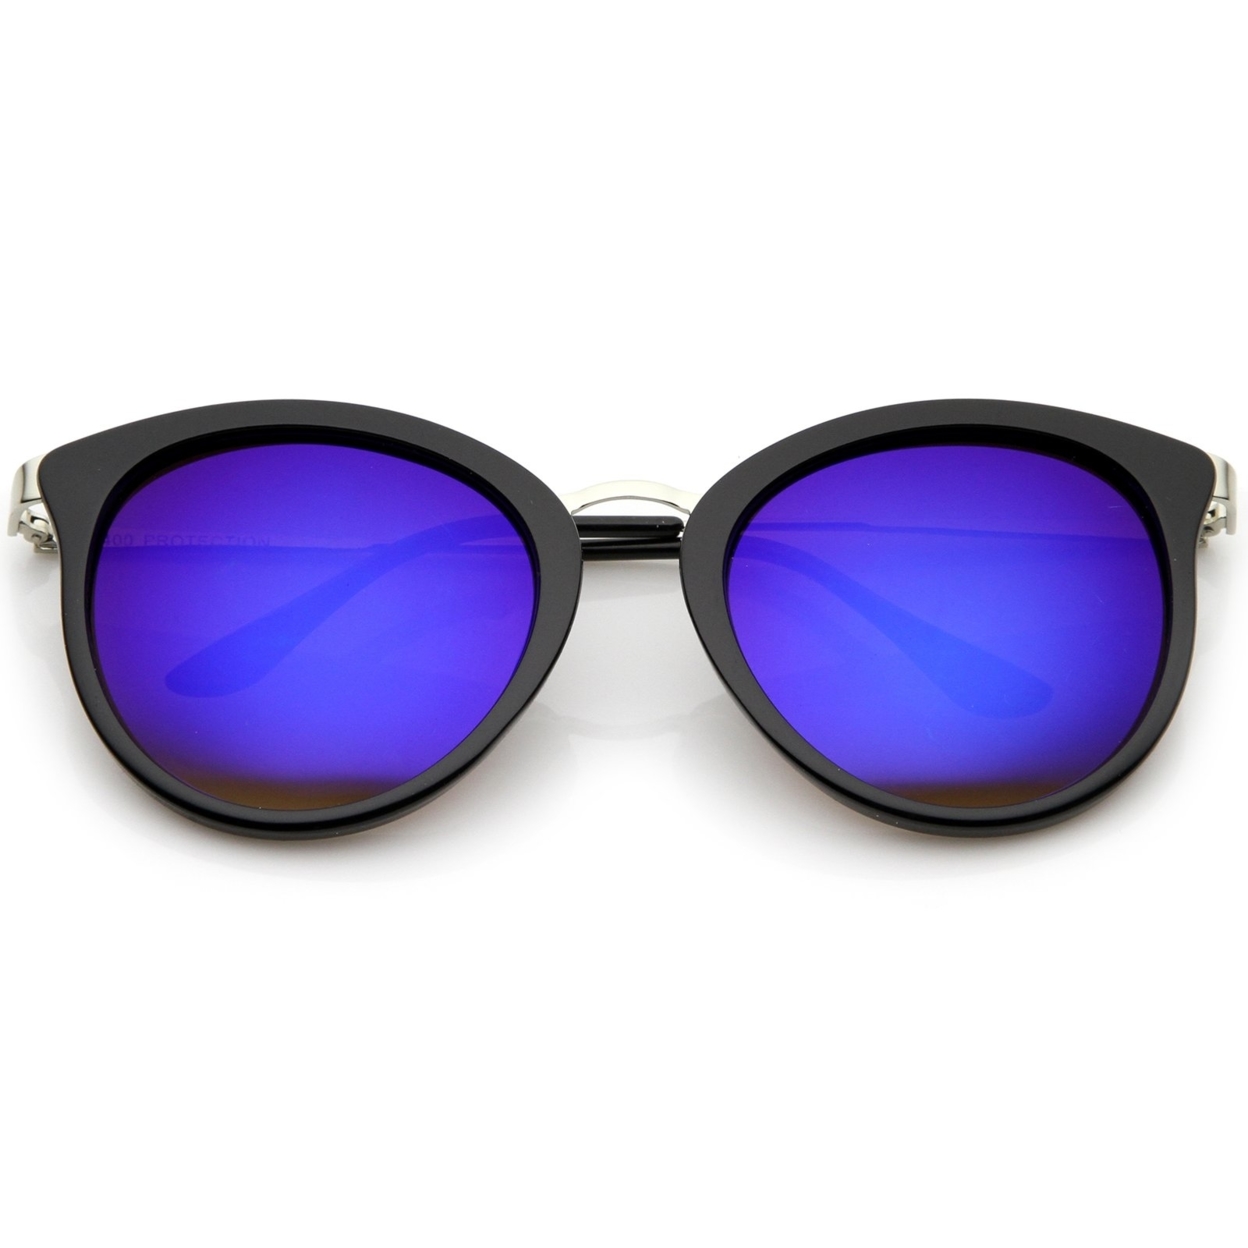 Modern Slim Metal Temple Colored Mirror Lens Cat Eye Sunglasses 54mm - Black-Silver / Blue Mirror